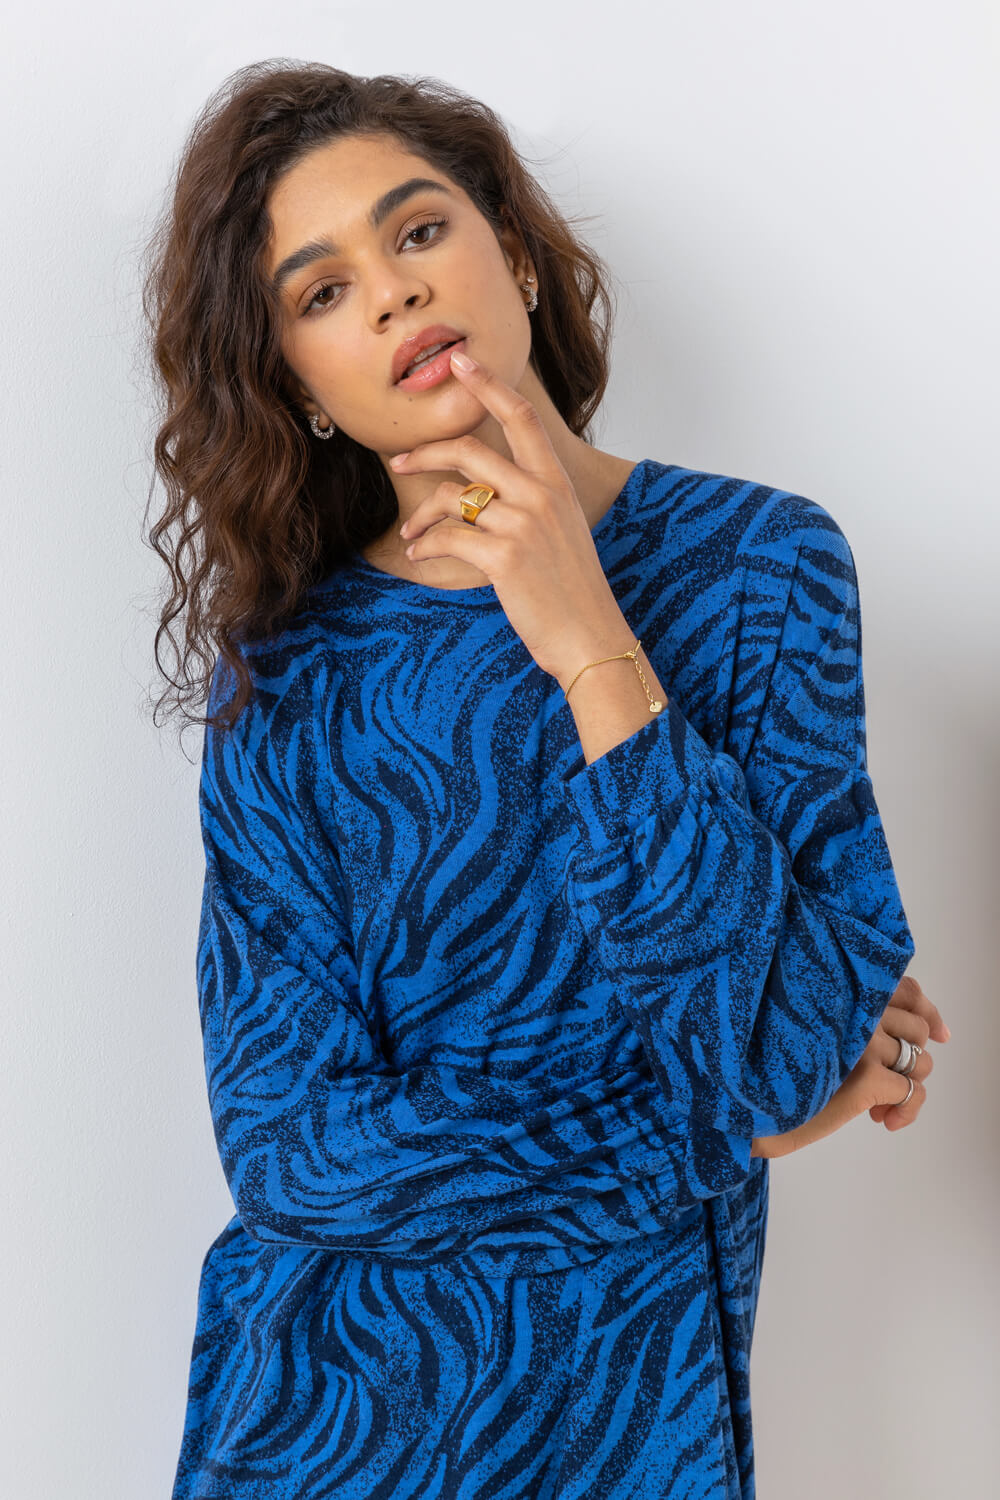 Royal Blue Animal Print Jacquard Sweater Dress, Image 4 of 5